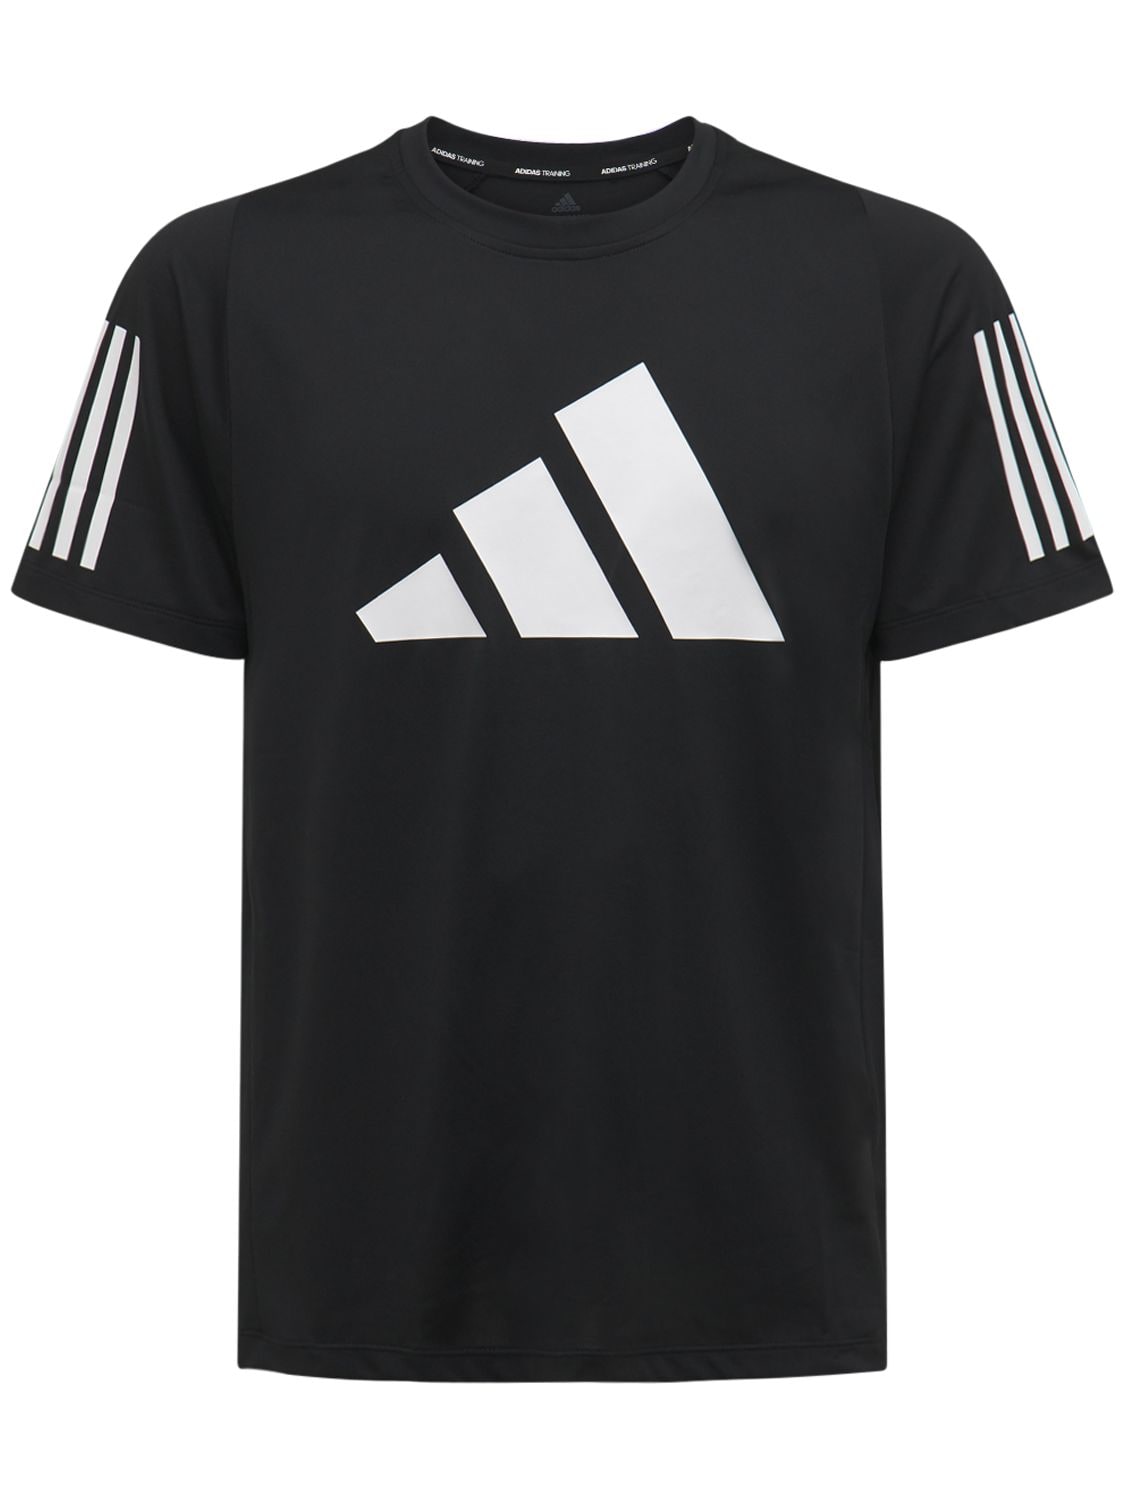 Adidas Originals Adidas Training 3-stripes Bar Logo T-shirt In Black